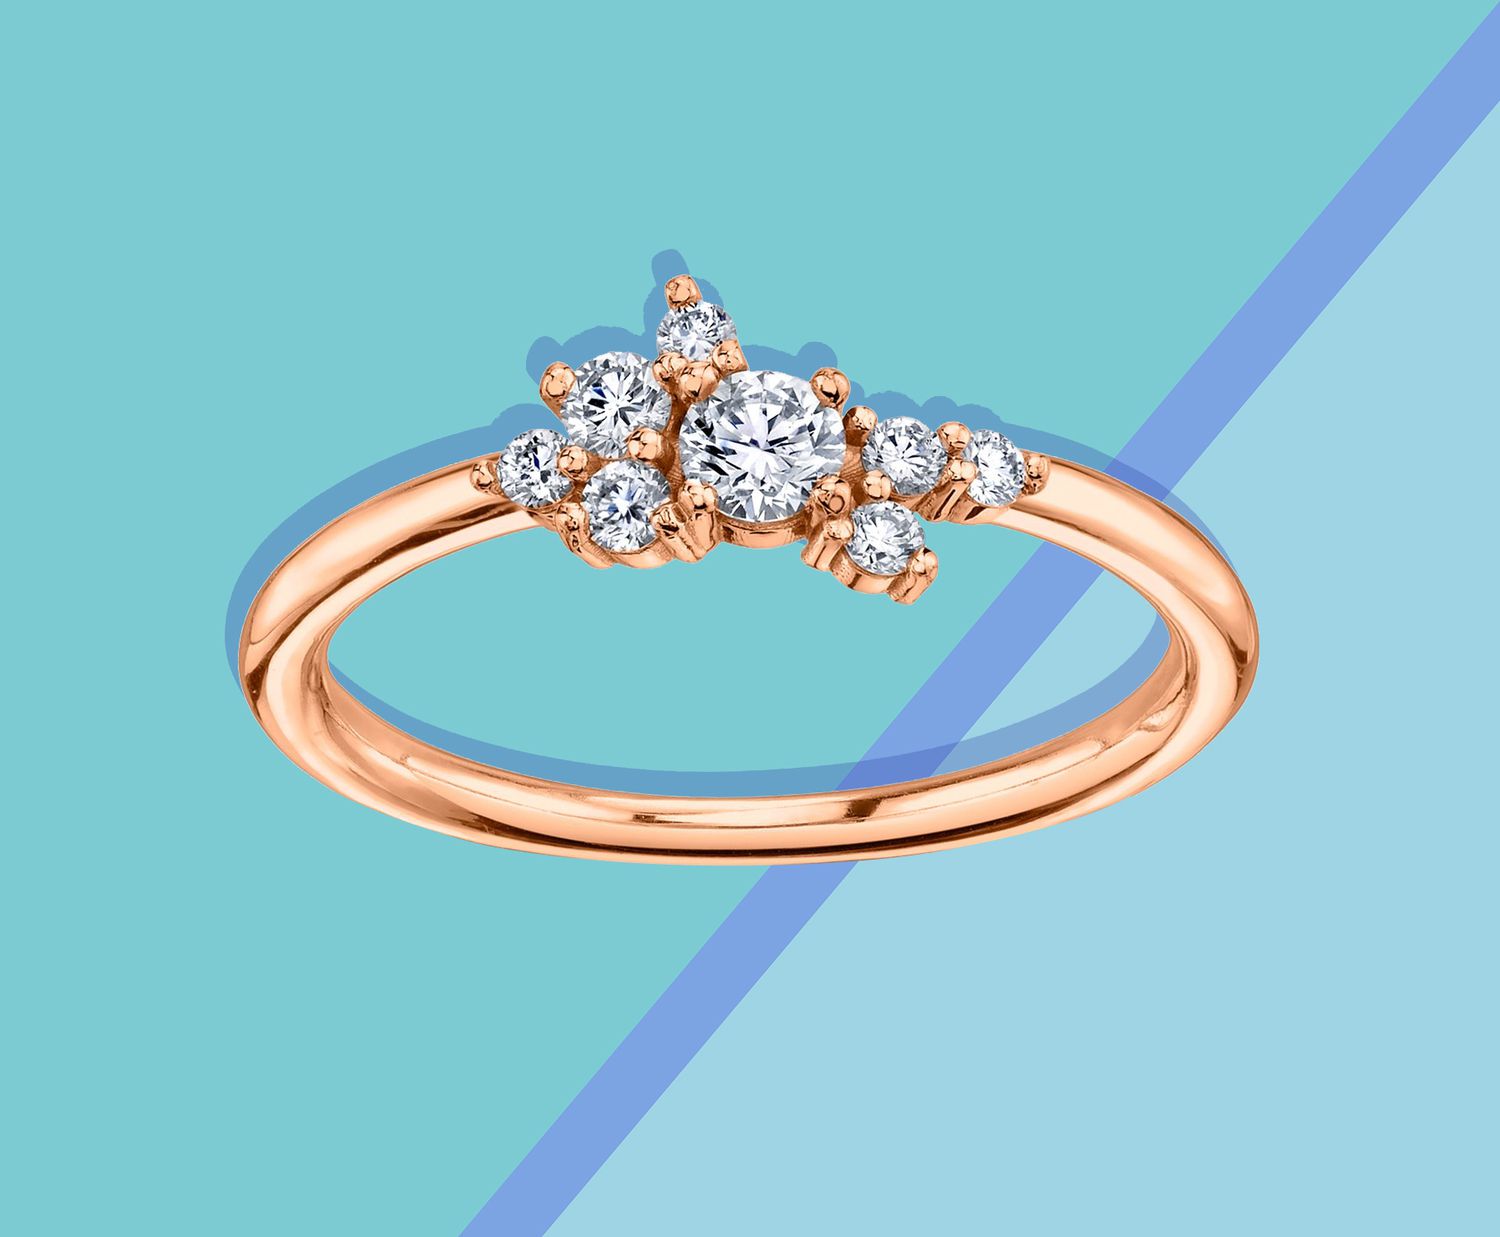 Elegance In Simplicity - Minimalist Engagement Rings